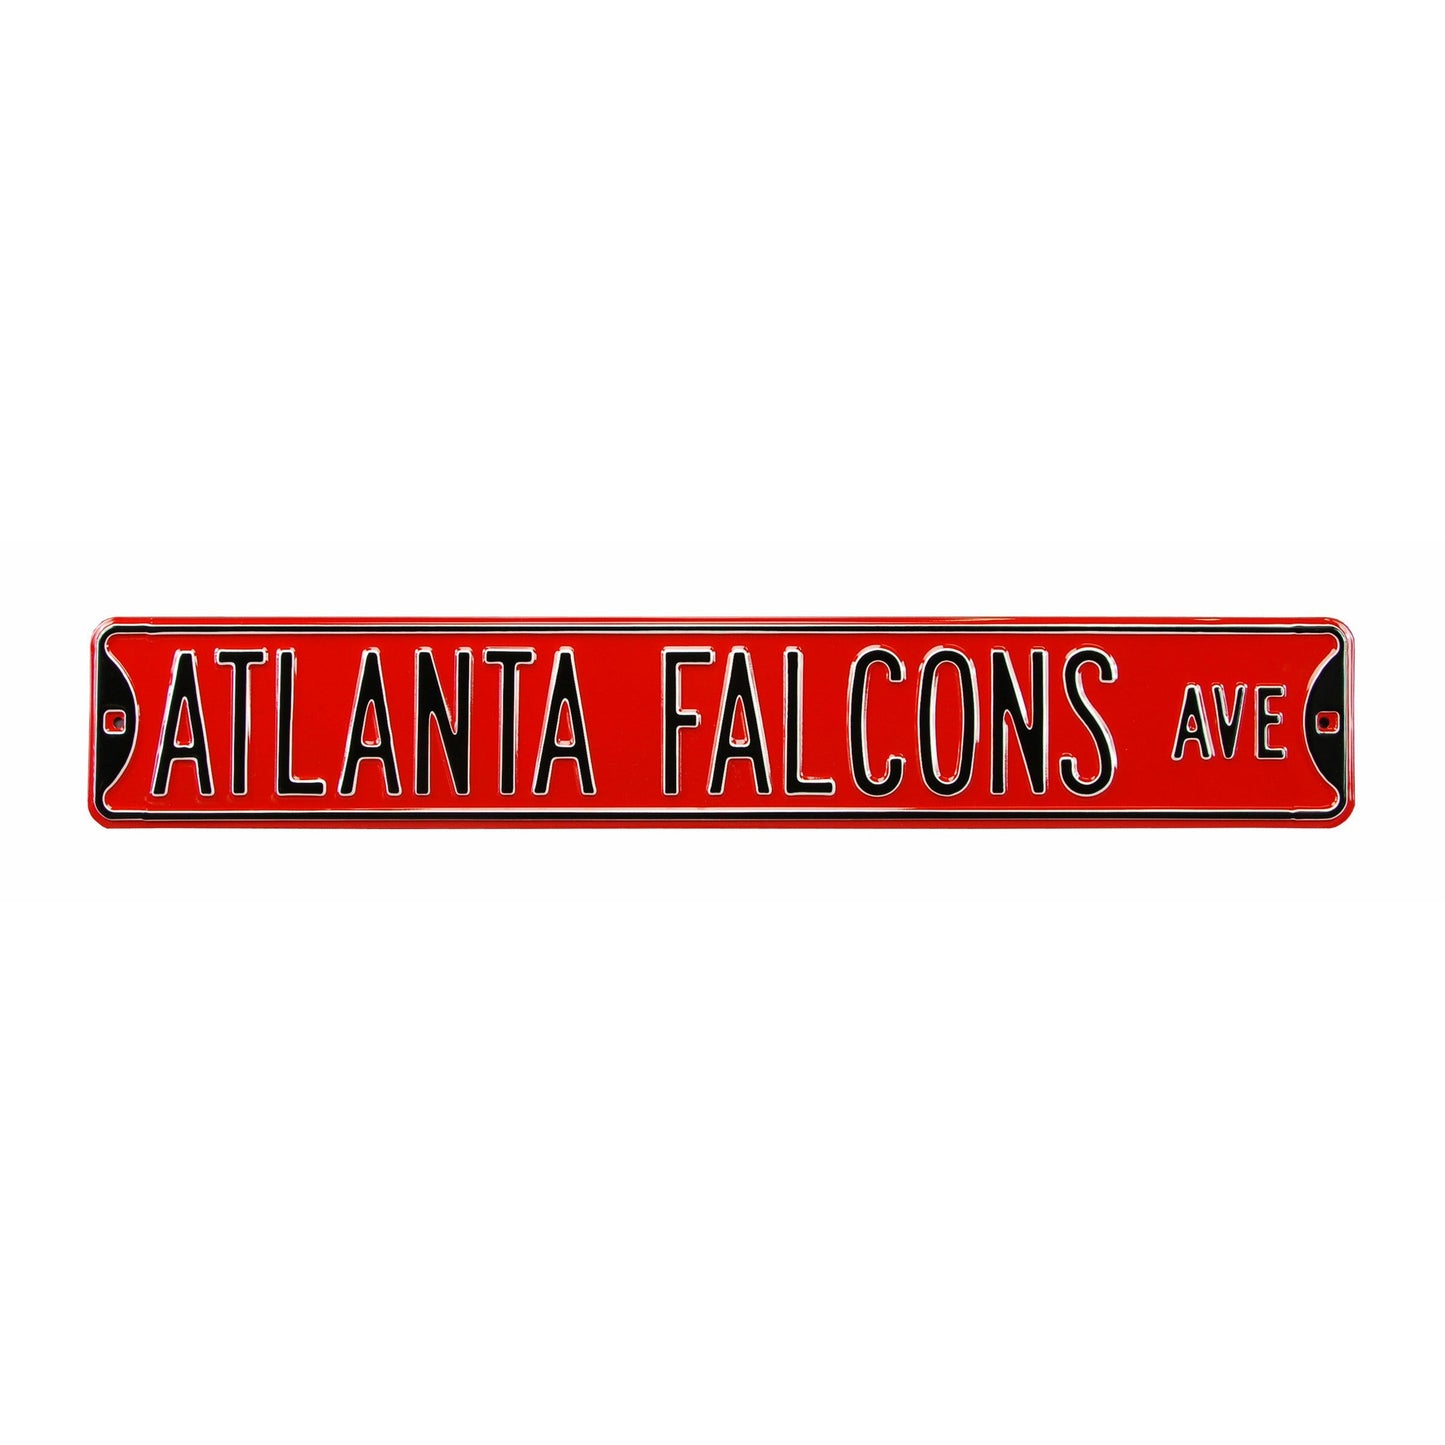 Atlanta Falcons - FALCONS AVE - Embossed Steel Street Sign